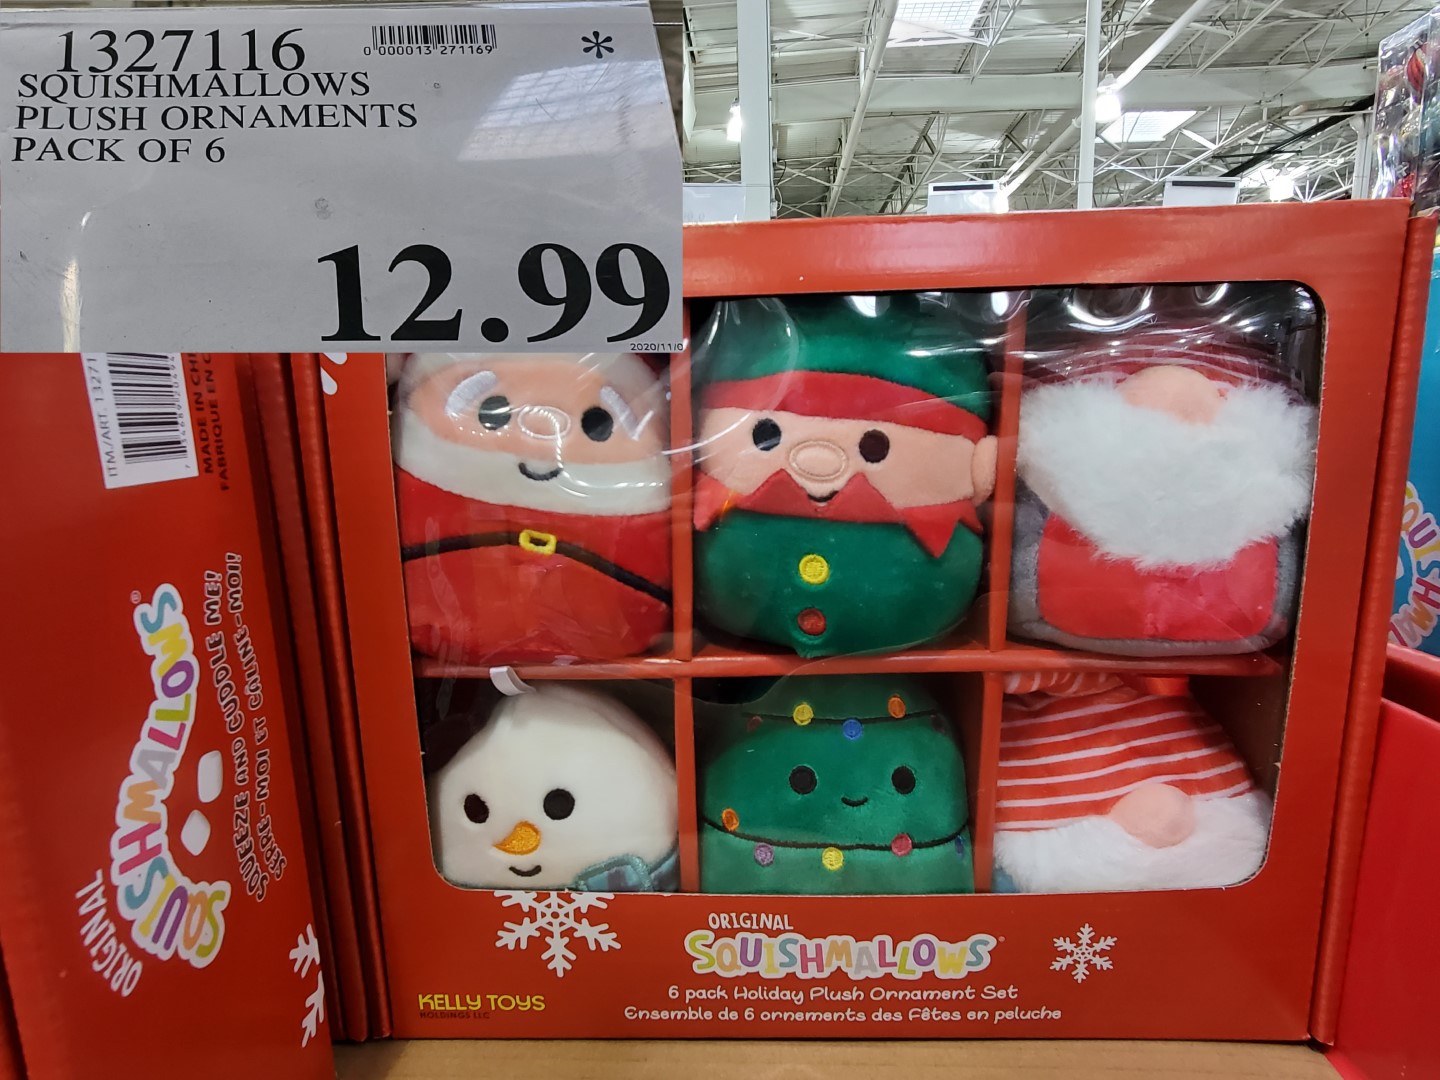 Costco] Squishmallows 6 Pack Holiday Plush Ornament Set $12.99